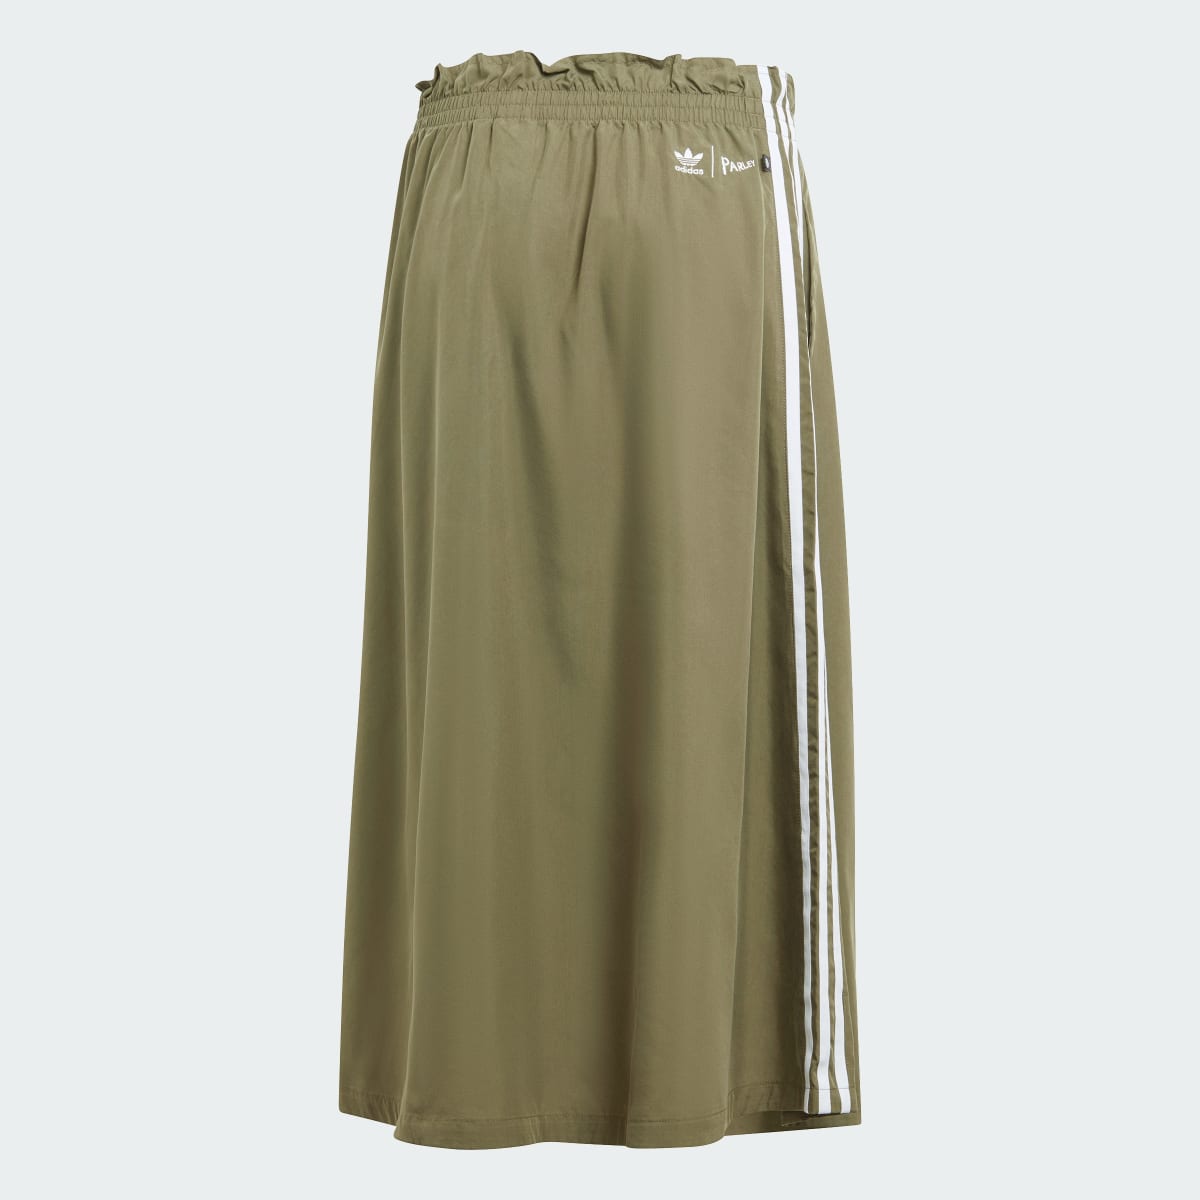 Adidas Parley Skirt. 5